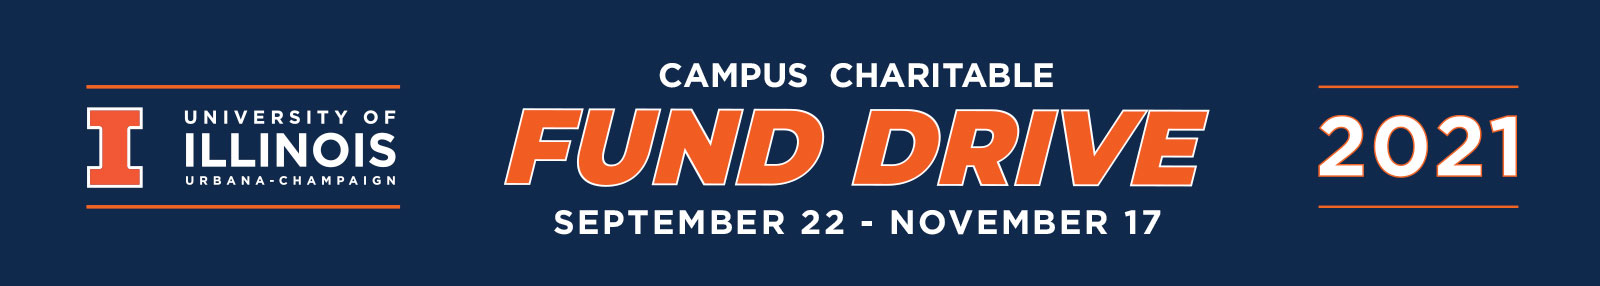 Campus Charitable Fund Drive September 22 - November 17, 2021